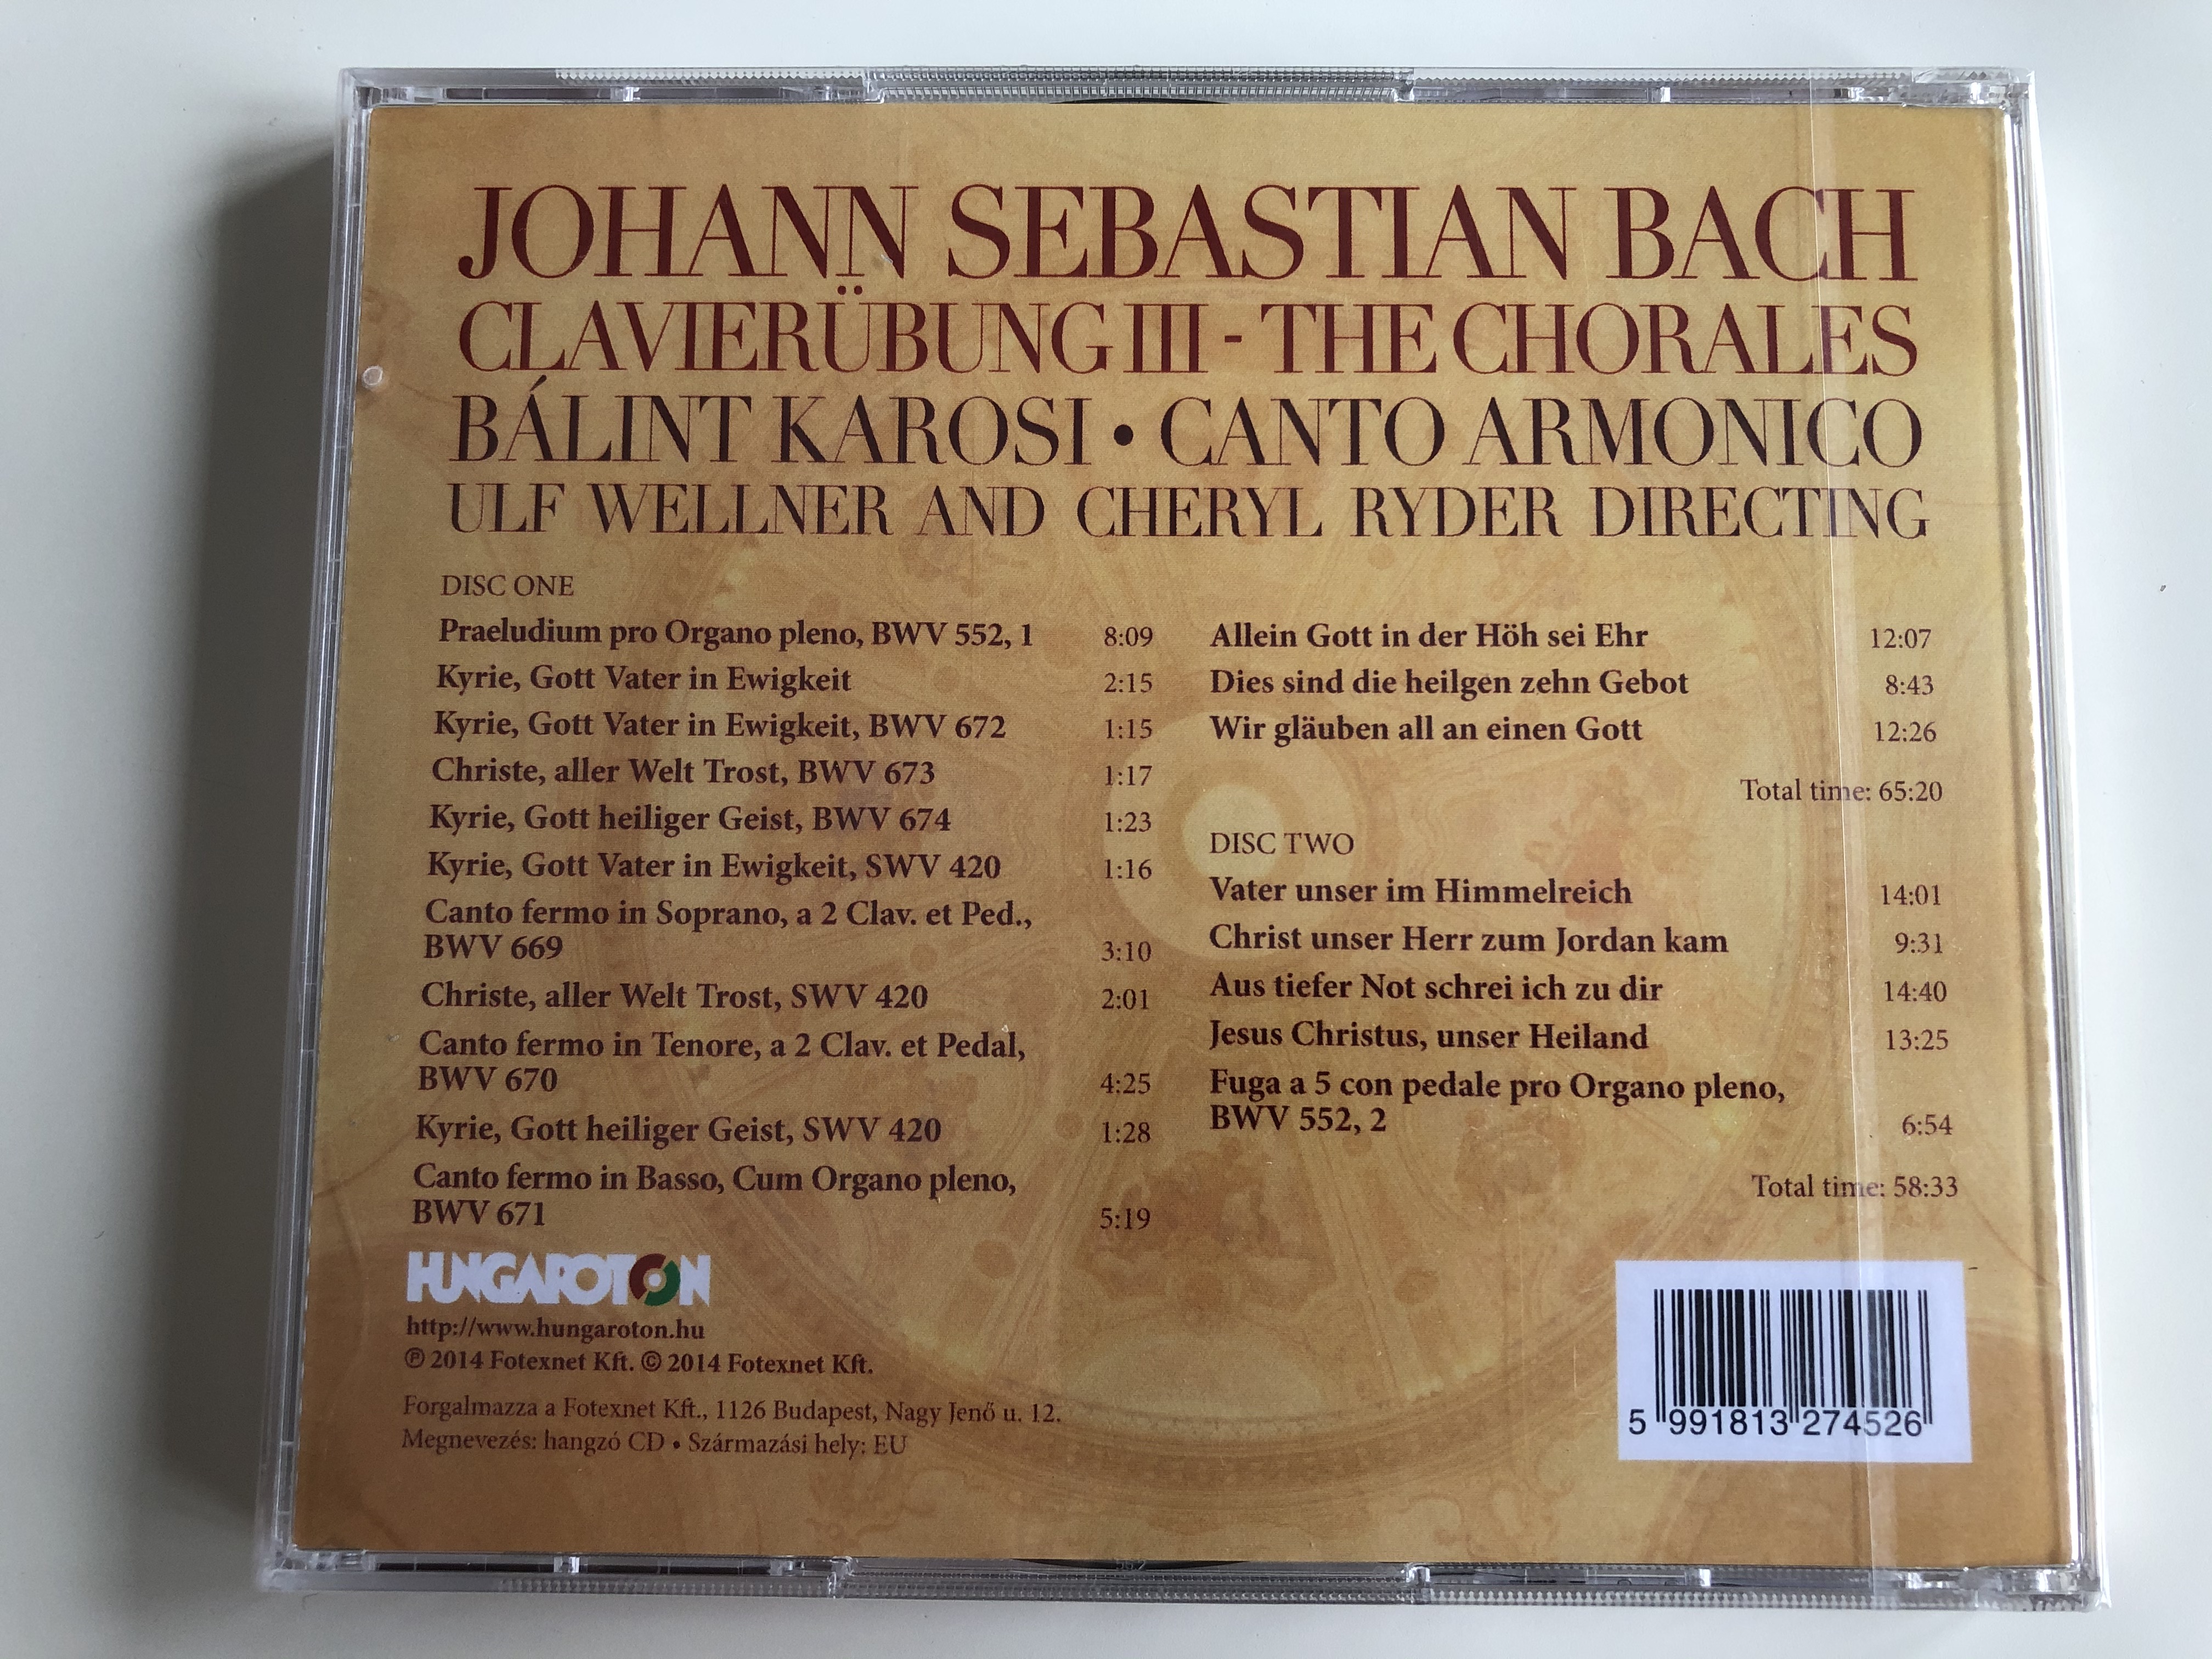 johann-sebastian-bach-clavierubung-iii-the-chorales-balint-karosi-canto-armonico-ulfwelner-cheryl-ryder-hunaroton-2x-audio-cd-2014-5991813274526-2-.jpg